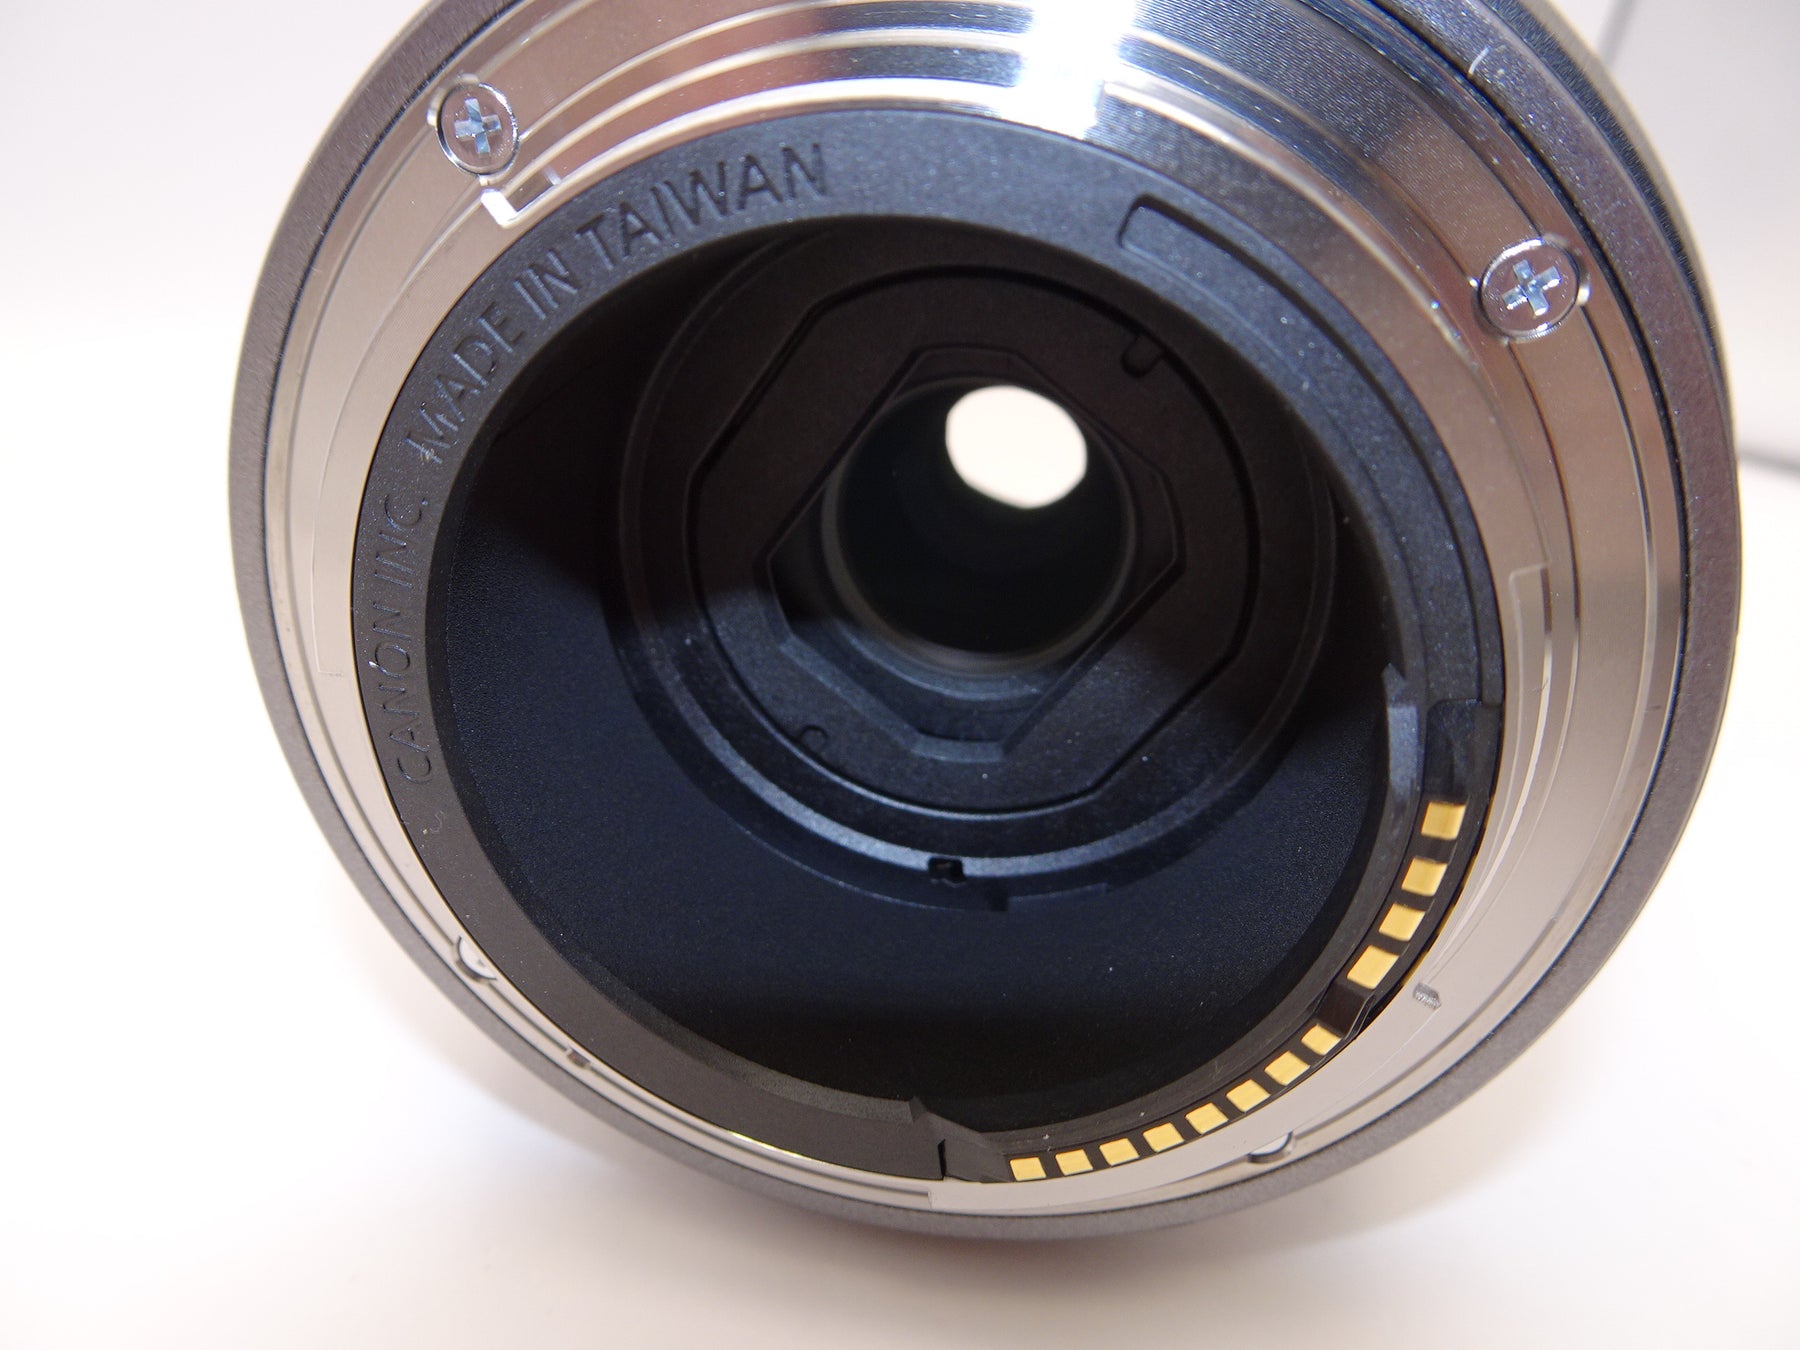 【外観特上級】Canon RF100-400mm F5.6-8  IS USM